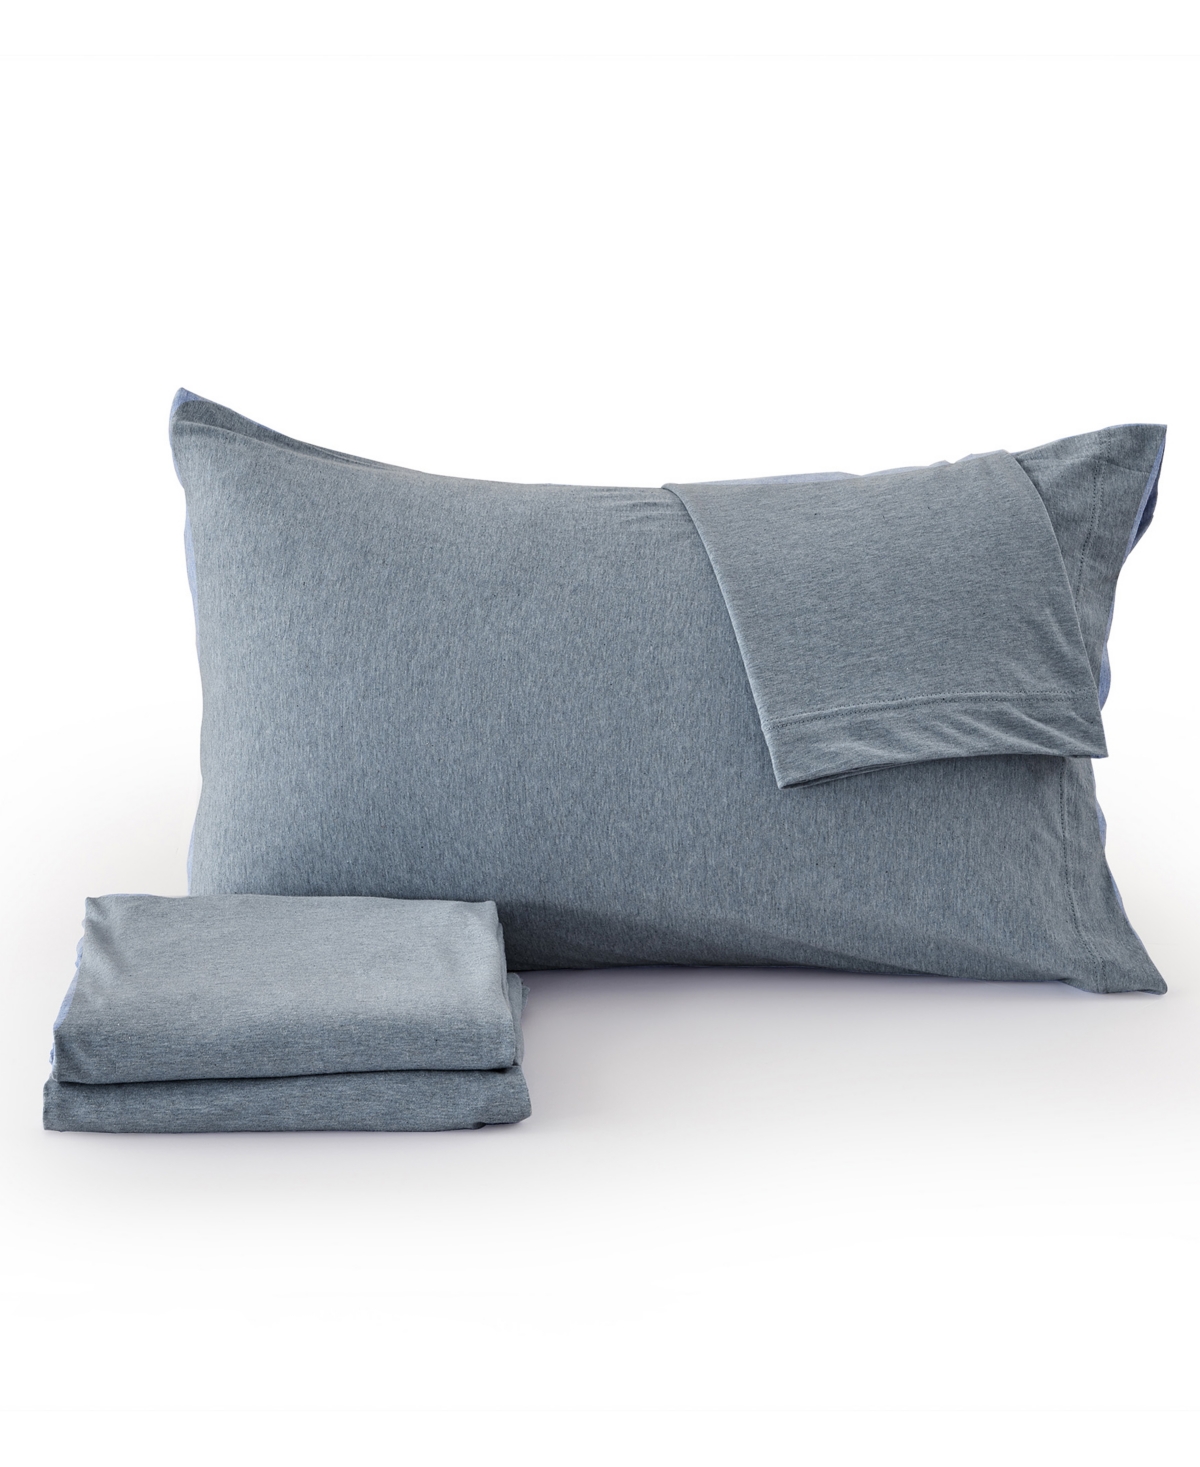 Premium Comforts Heathered Melange T-shirt Jersey Knit Cotton Blend 4 Piece Sheet Set, Full In Heathered Denim Blue